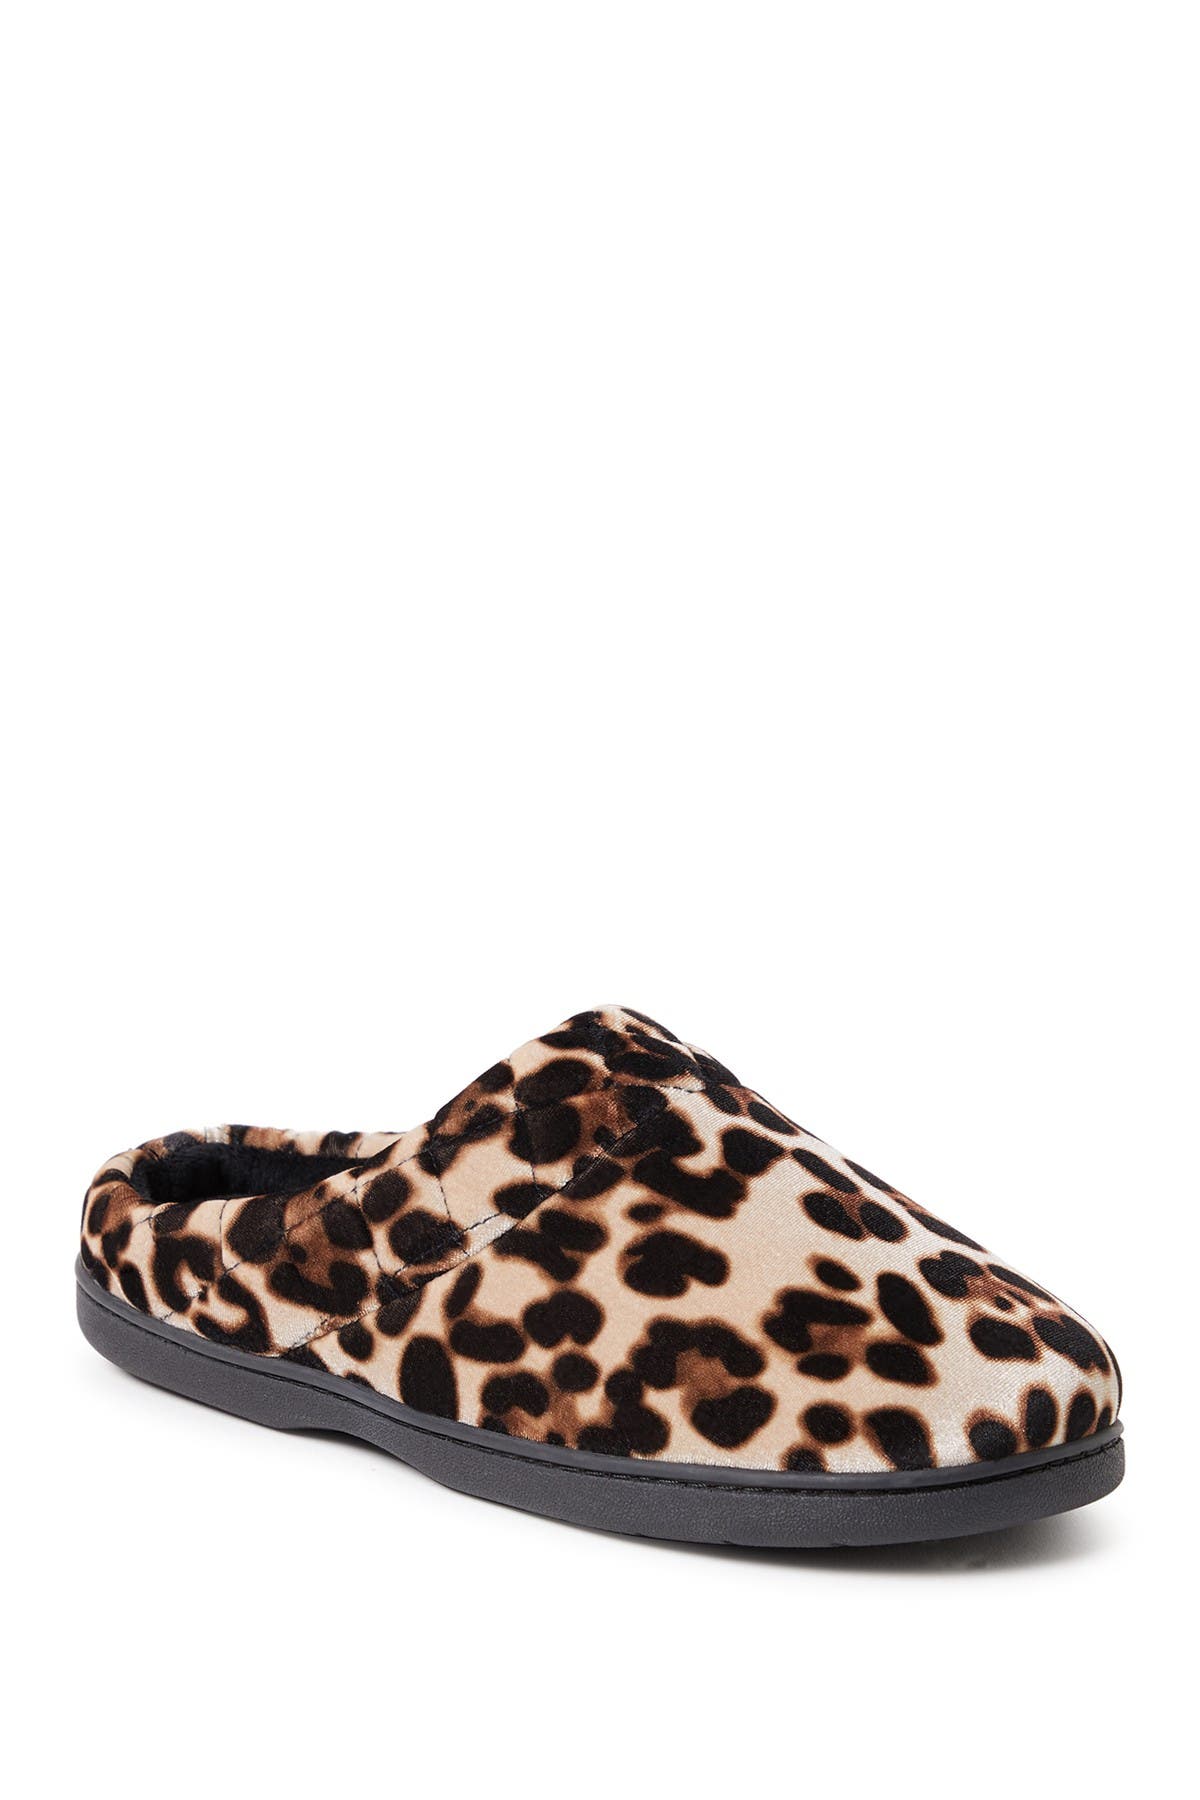 dearfoam cheetah slippers